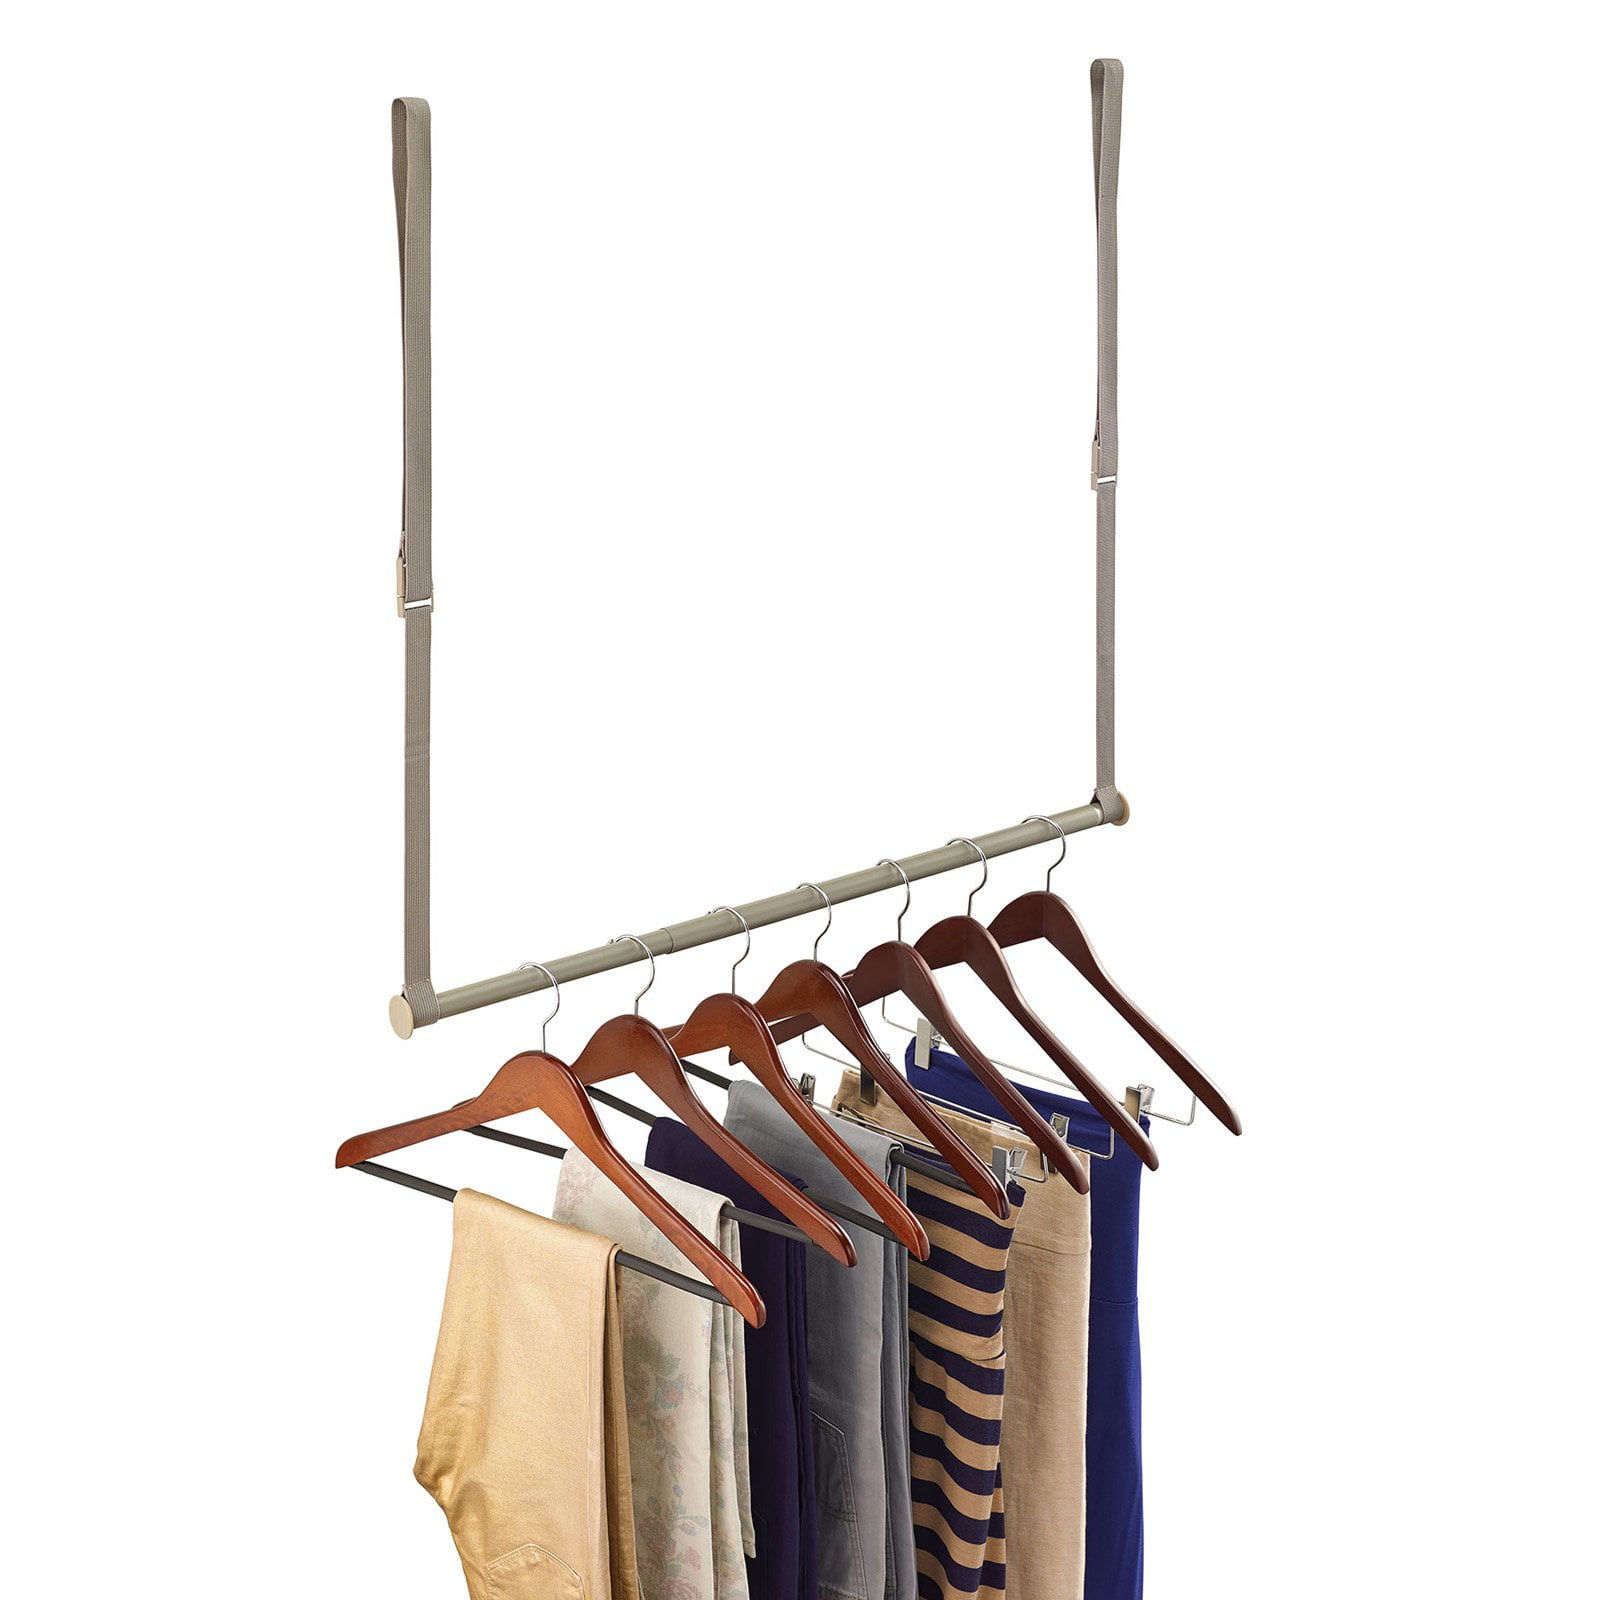 The ADJUSTABLE Closet Rod Hanger Doubles Closet Rod Space 